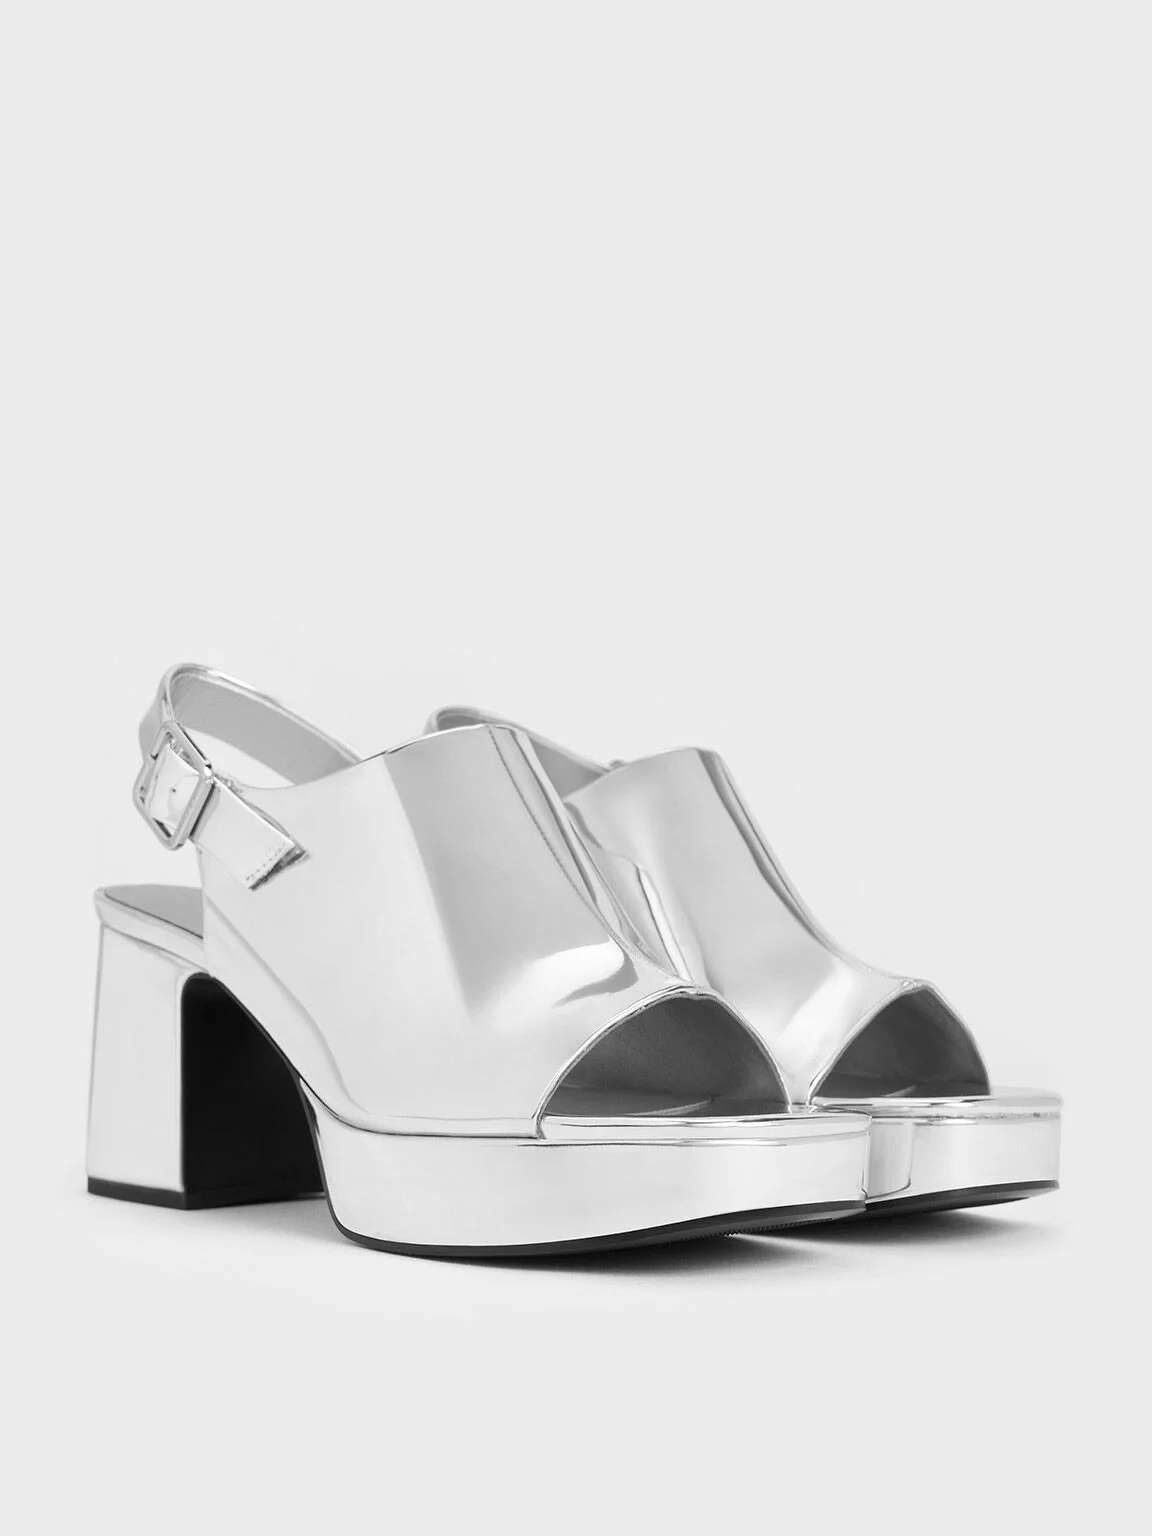 Women’s metallic peep-toe platform sandals in silver - CHARLES & KEITH